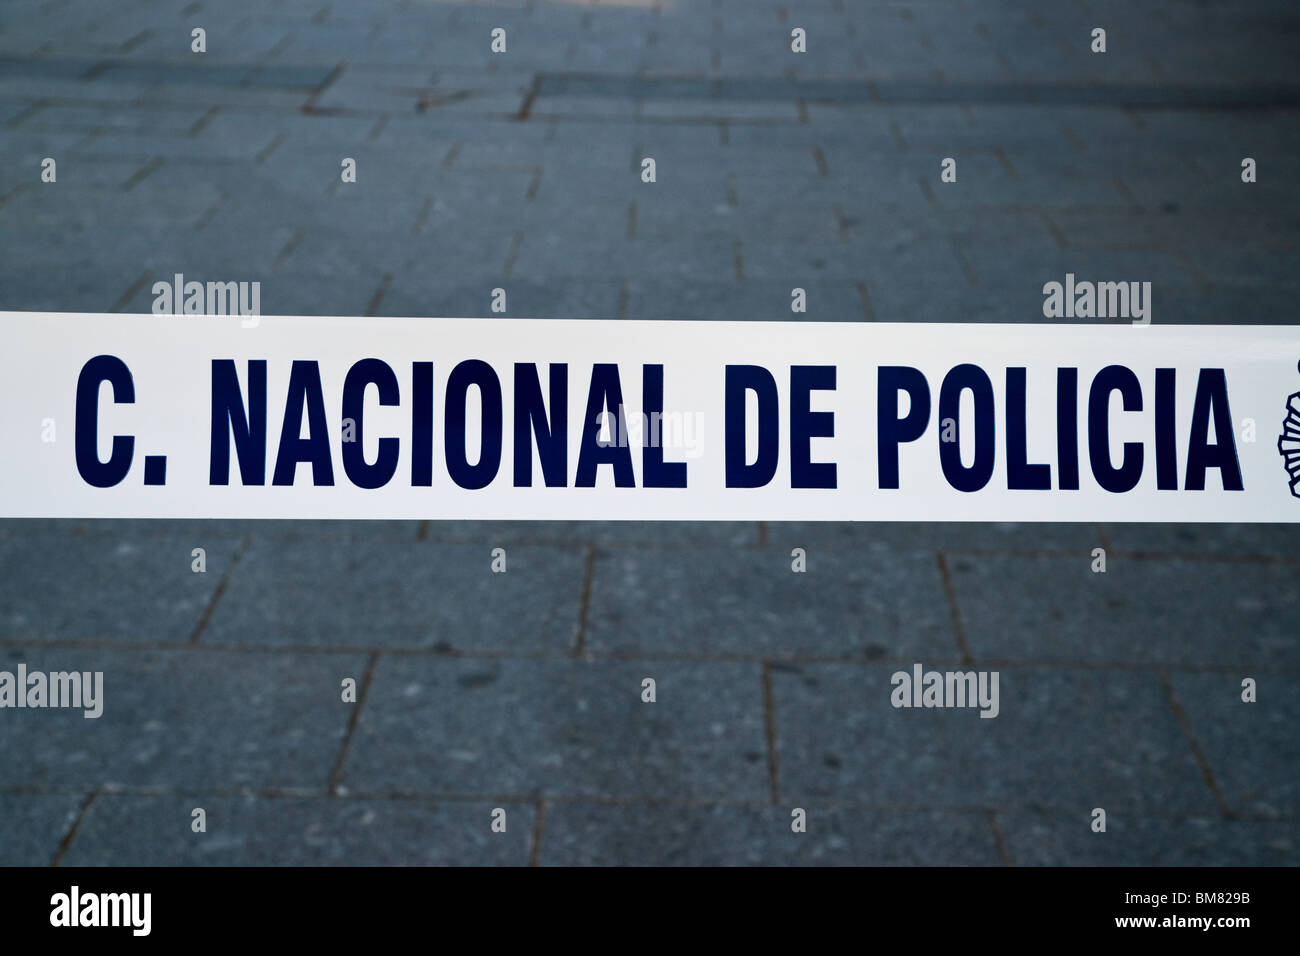 C. NACIONAL DE POLICIA Stockfoto